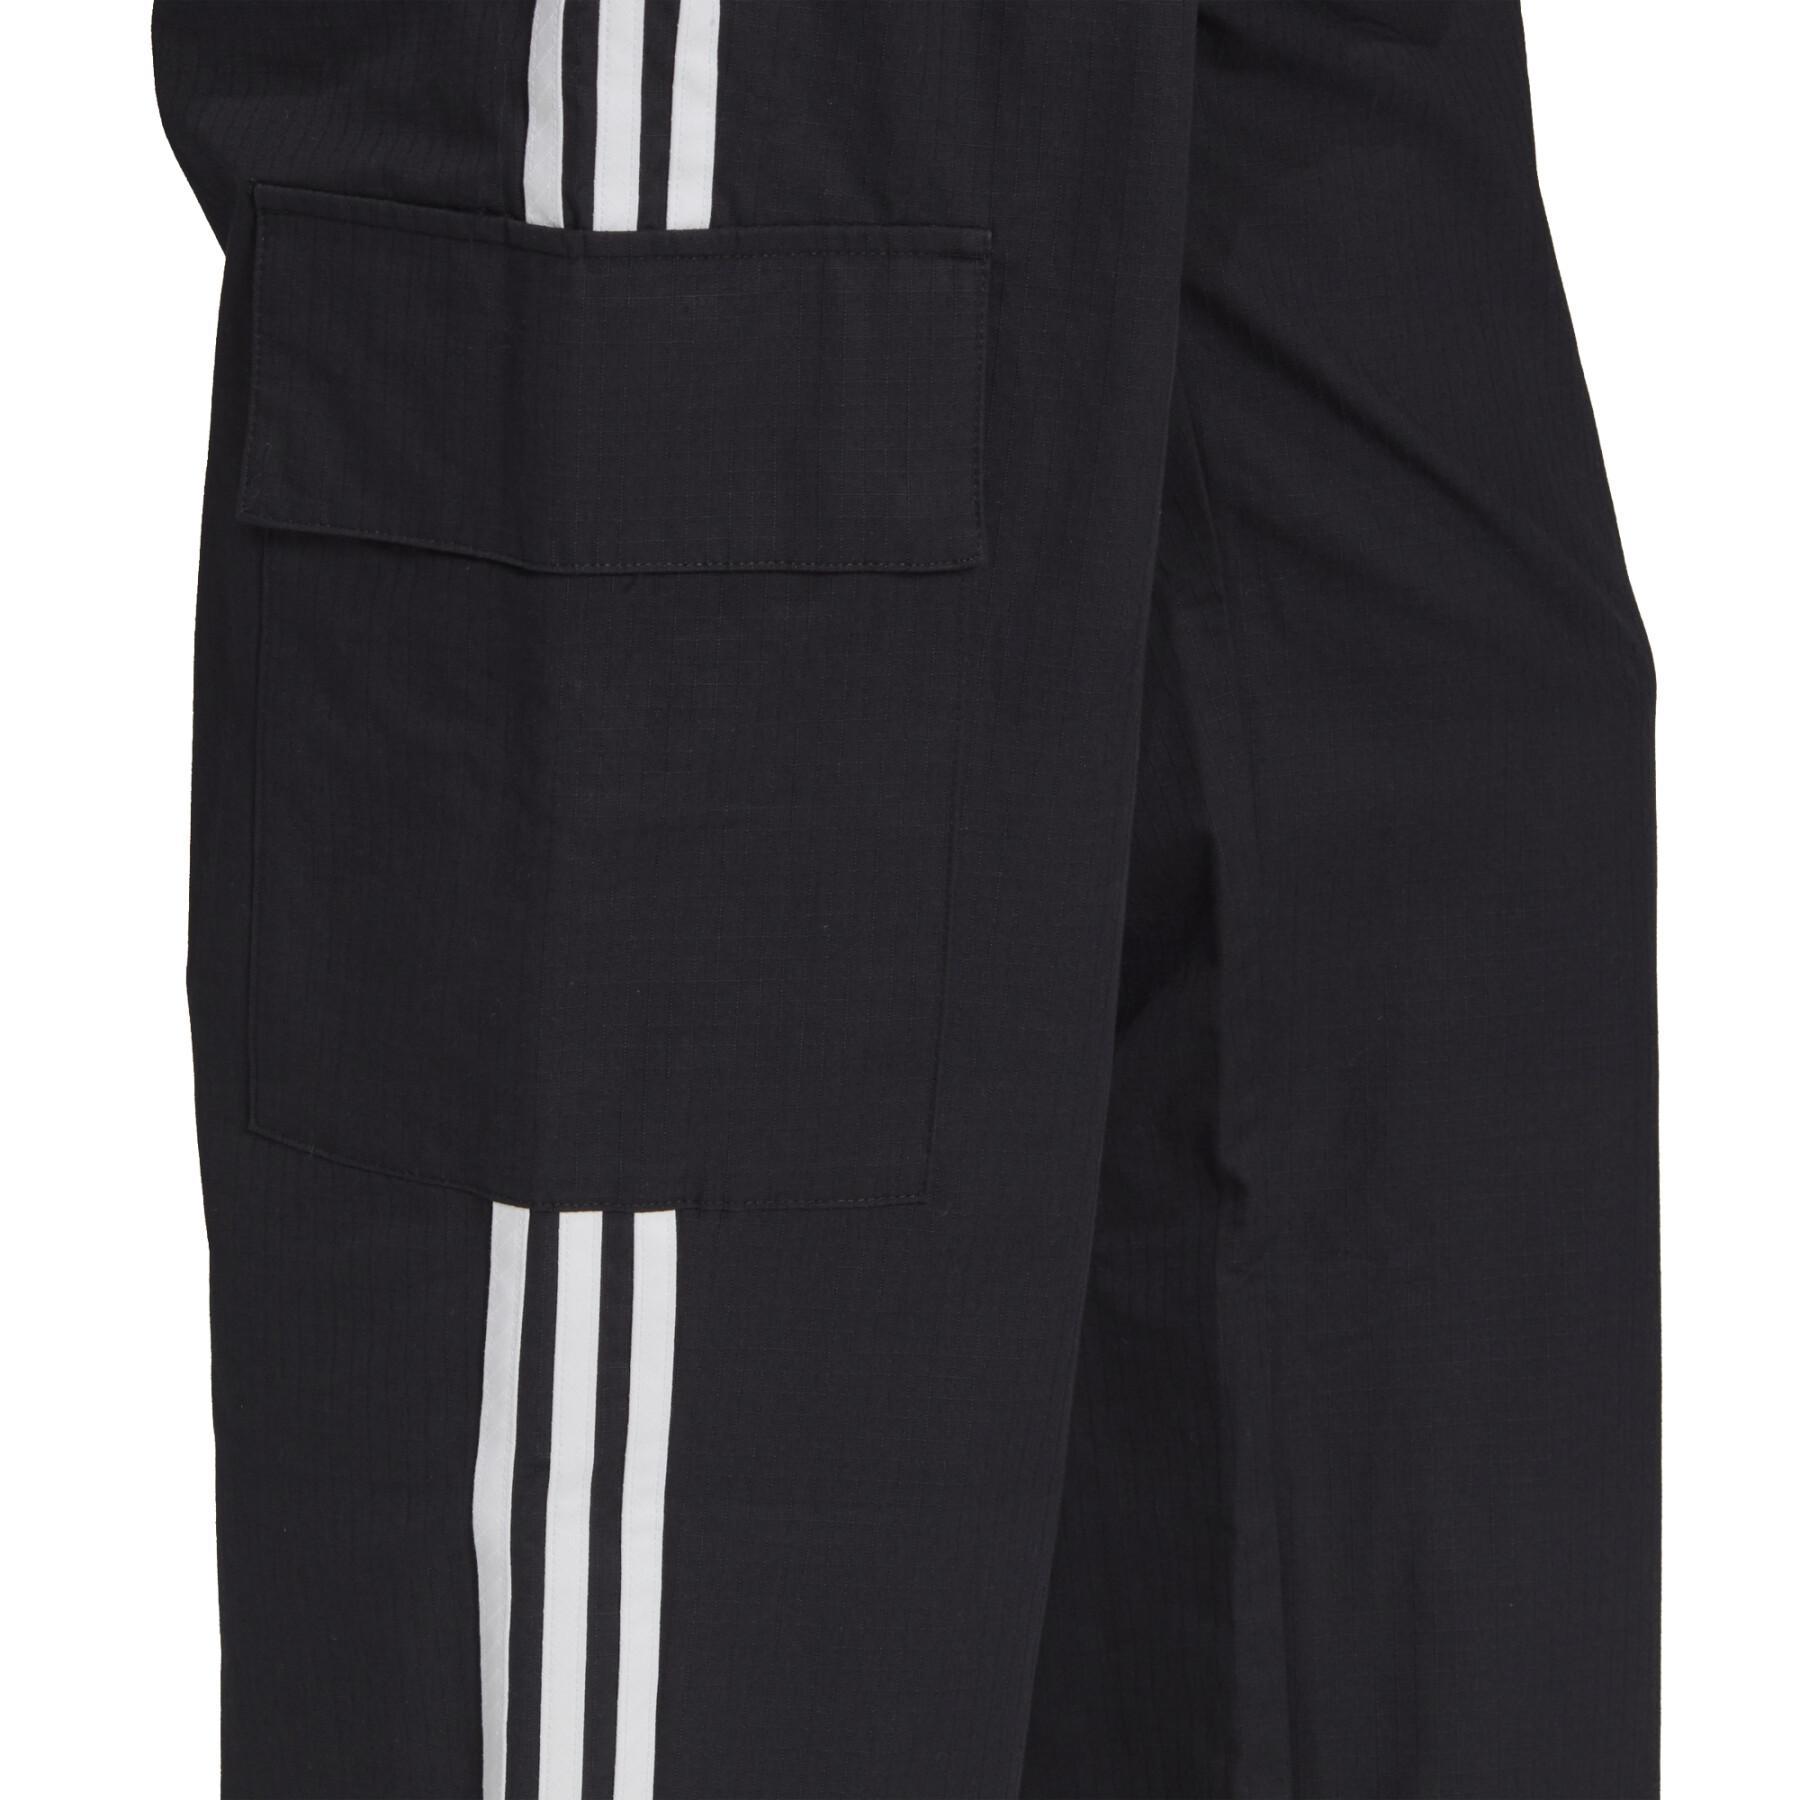 Pantaloni Cargo adidas Originals Adicolor 3-Stripes